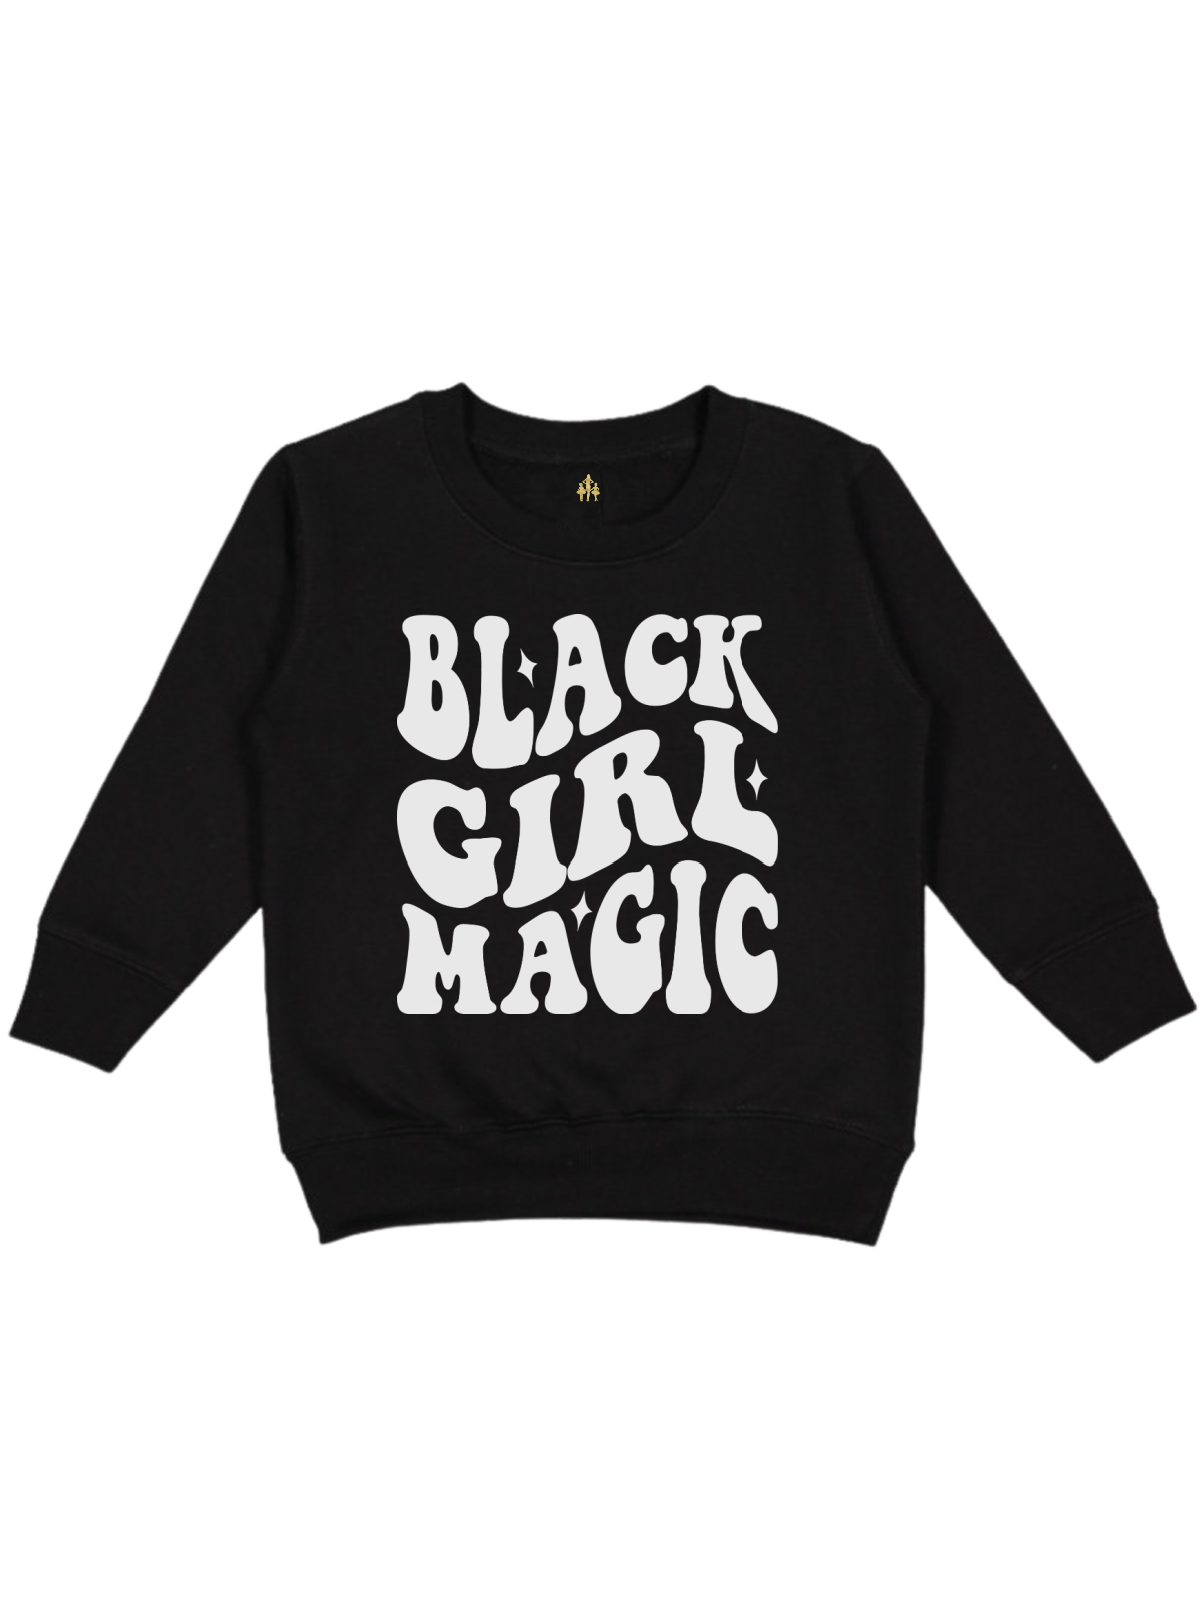 Black Girl Magic Kids Black Pullover Sweatshirt